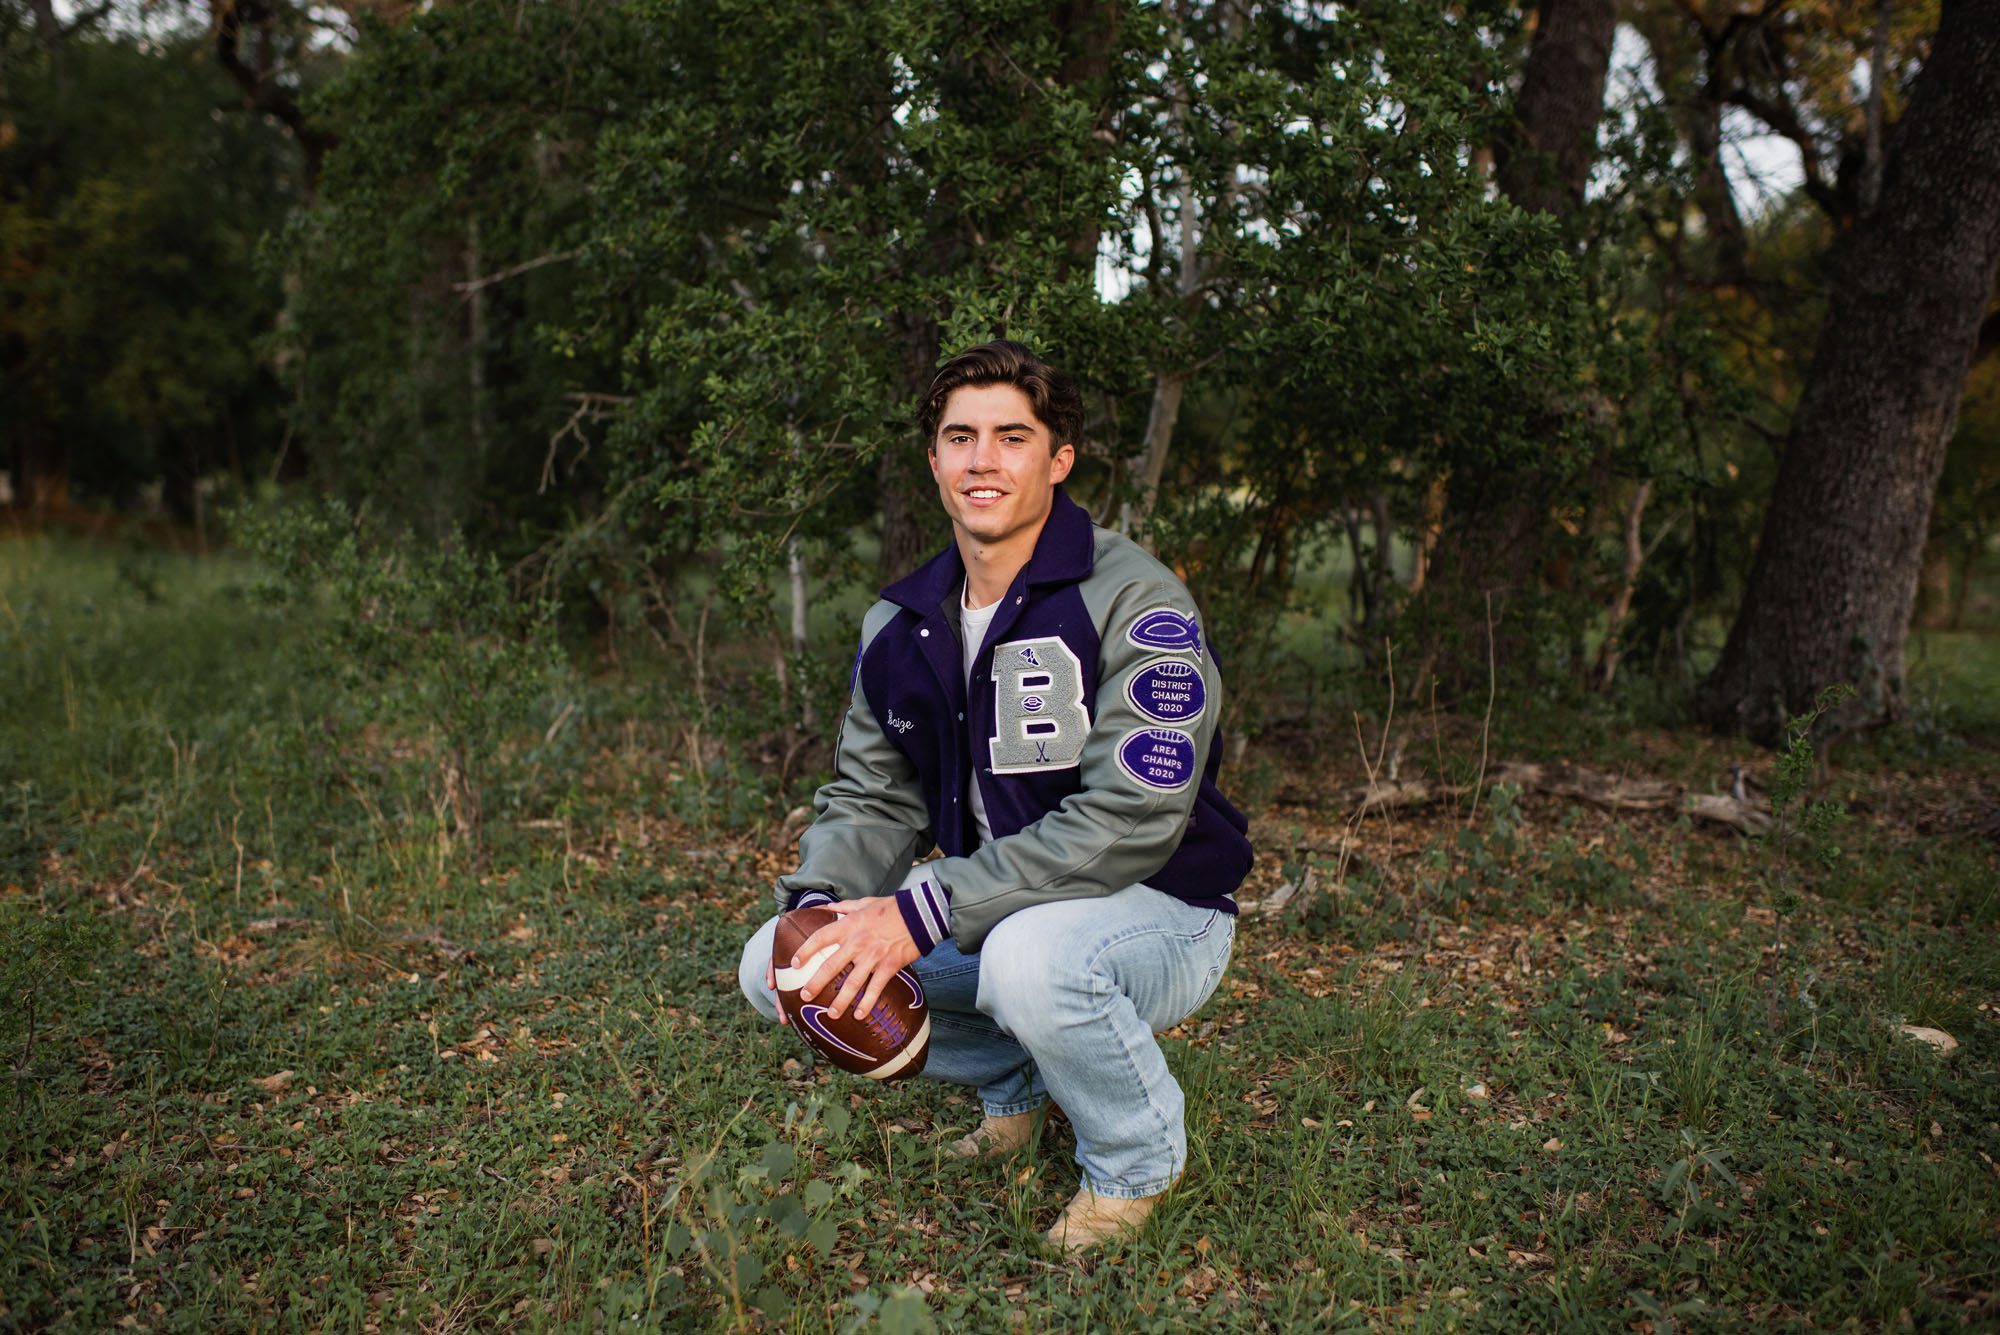 Boy squatting down with football and letter jacket, San Antonio senior photographer